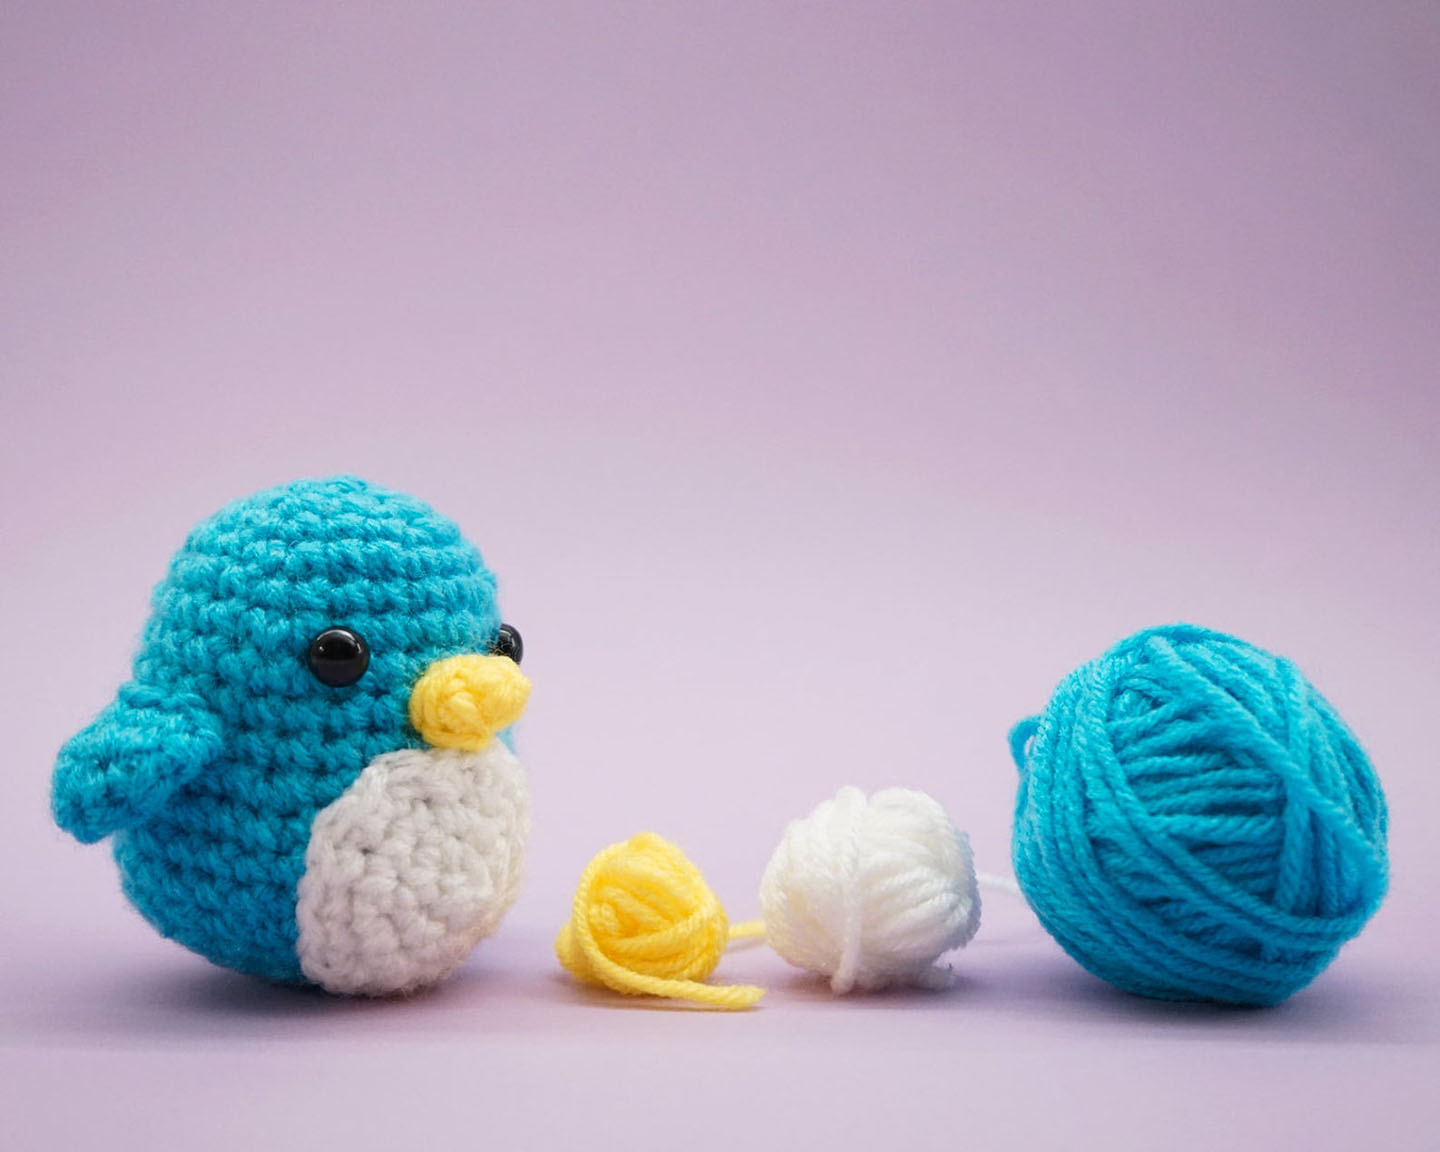 Beginner Crochet Kit, Crochet Kits for Kids and Adults, 3PCS Crochet Animal  Kit for Beginners Include Videos Tutorials, Yarn, Eyes, Stuffing, Crochet